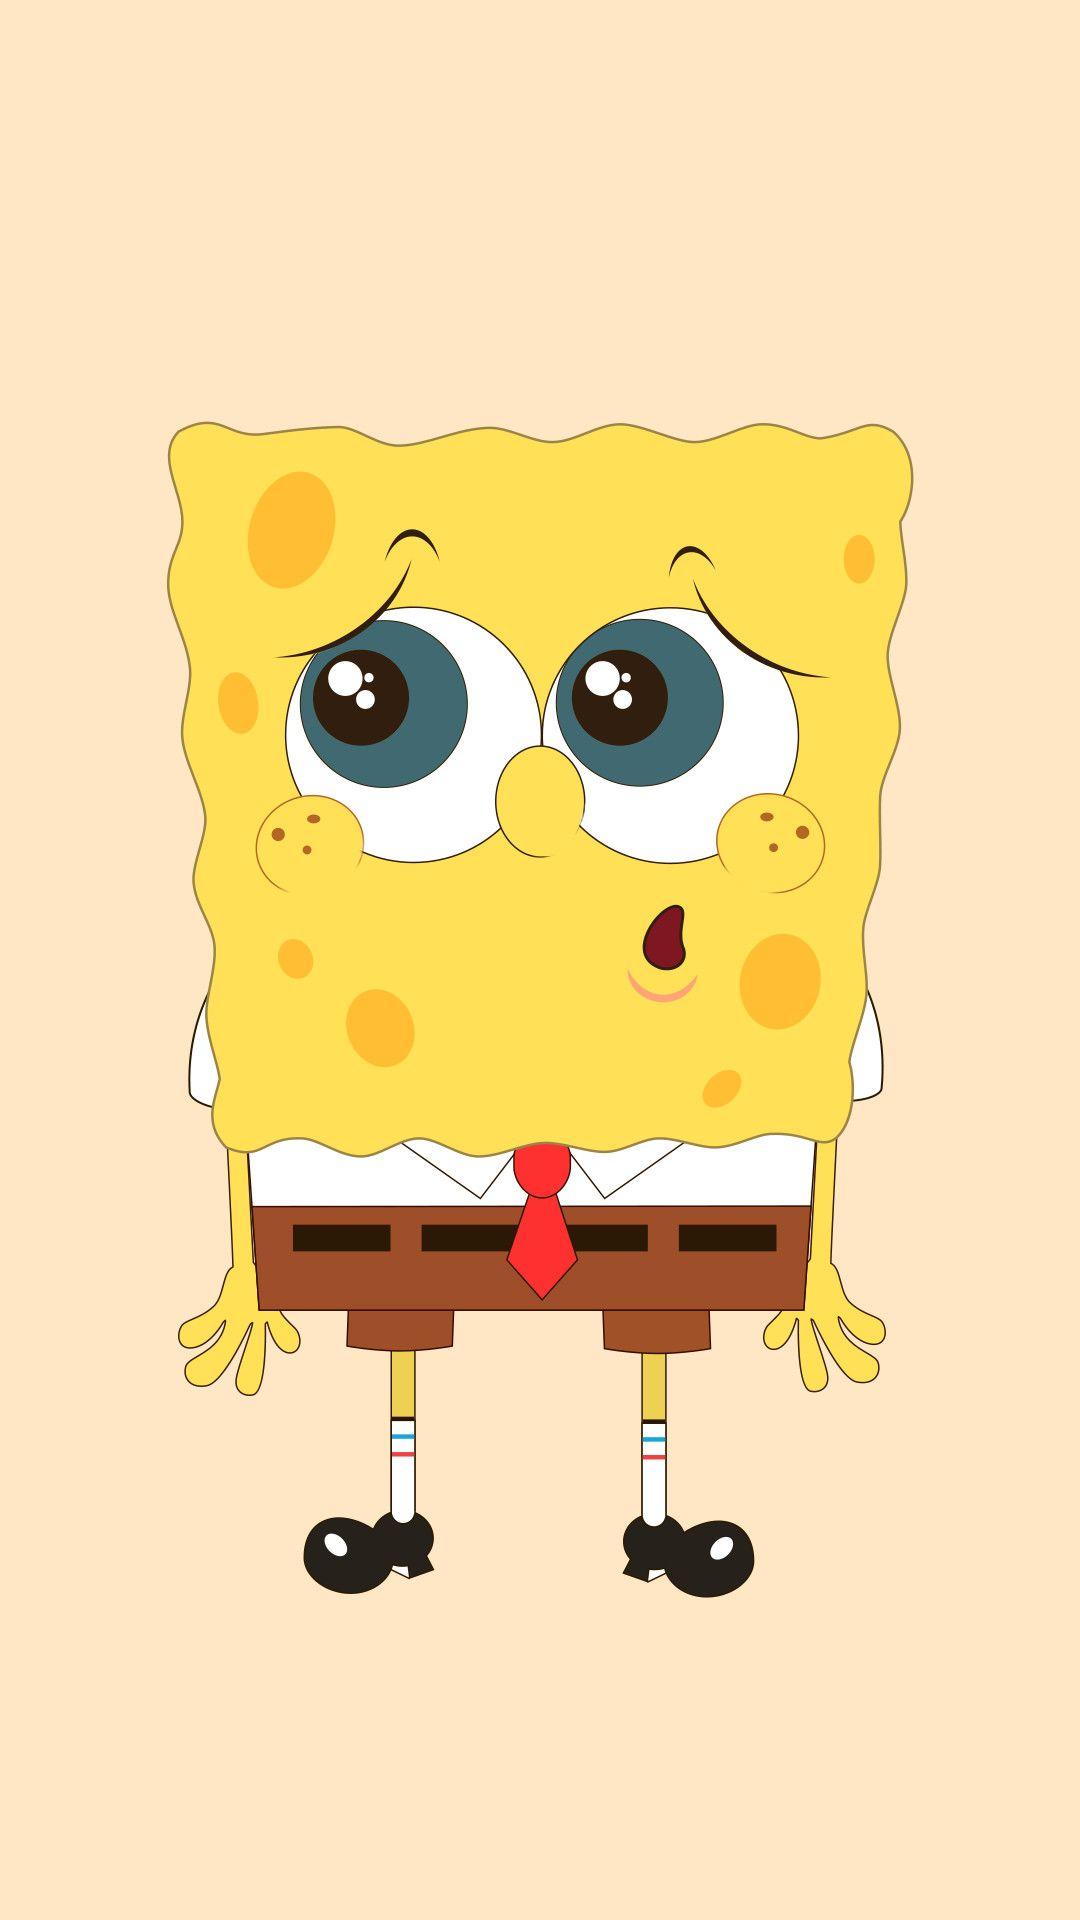 Download Sad Spongebob Fake Smile Wallpaper